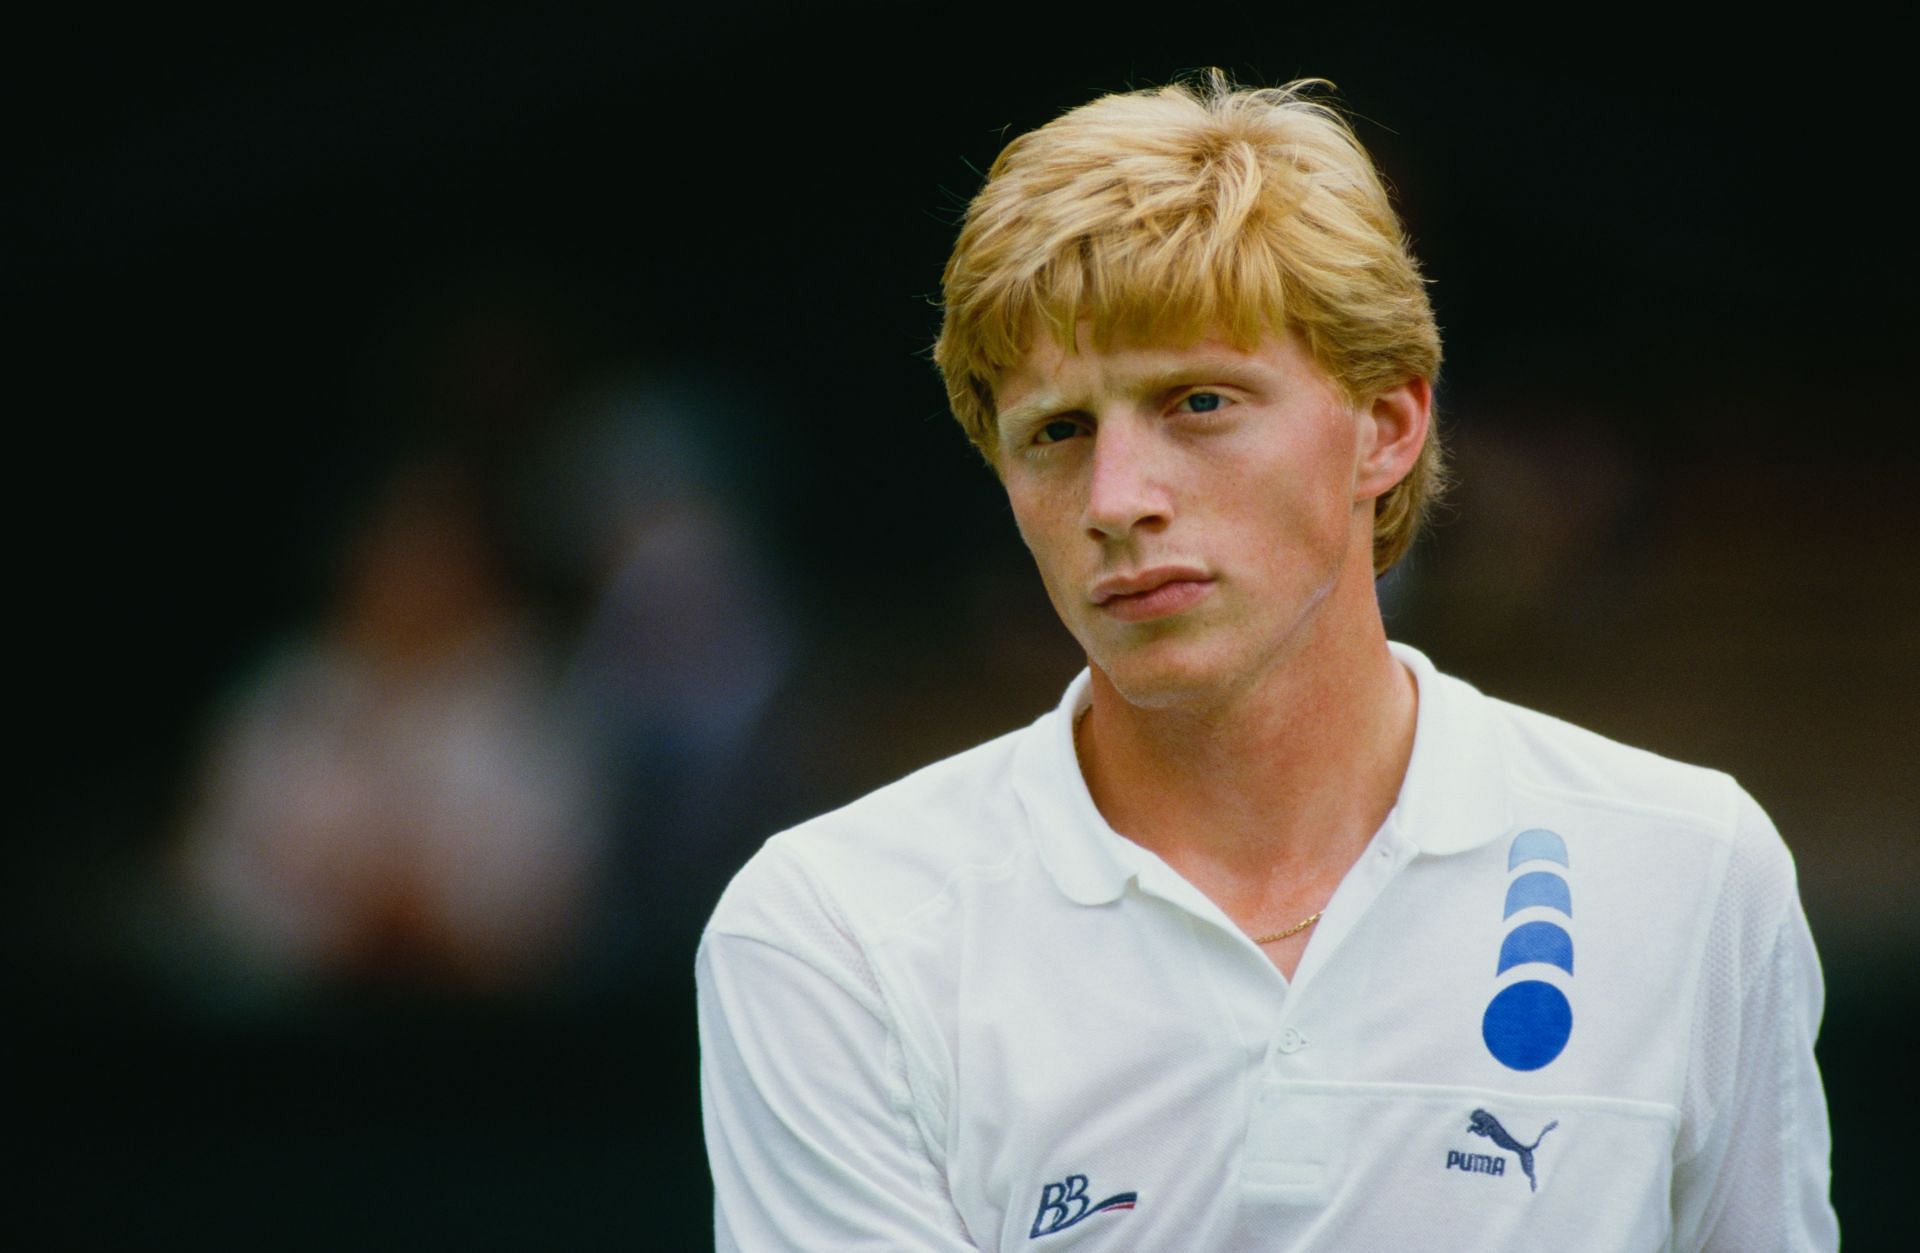 Boris Becker scored his first big wins at the British Clubs.